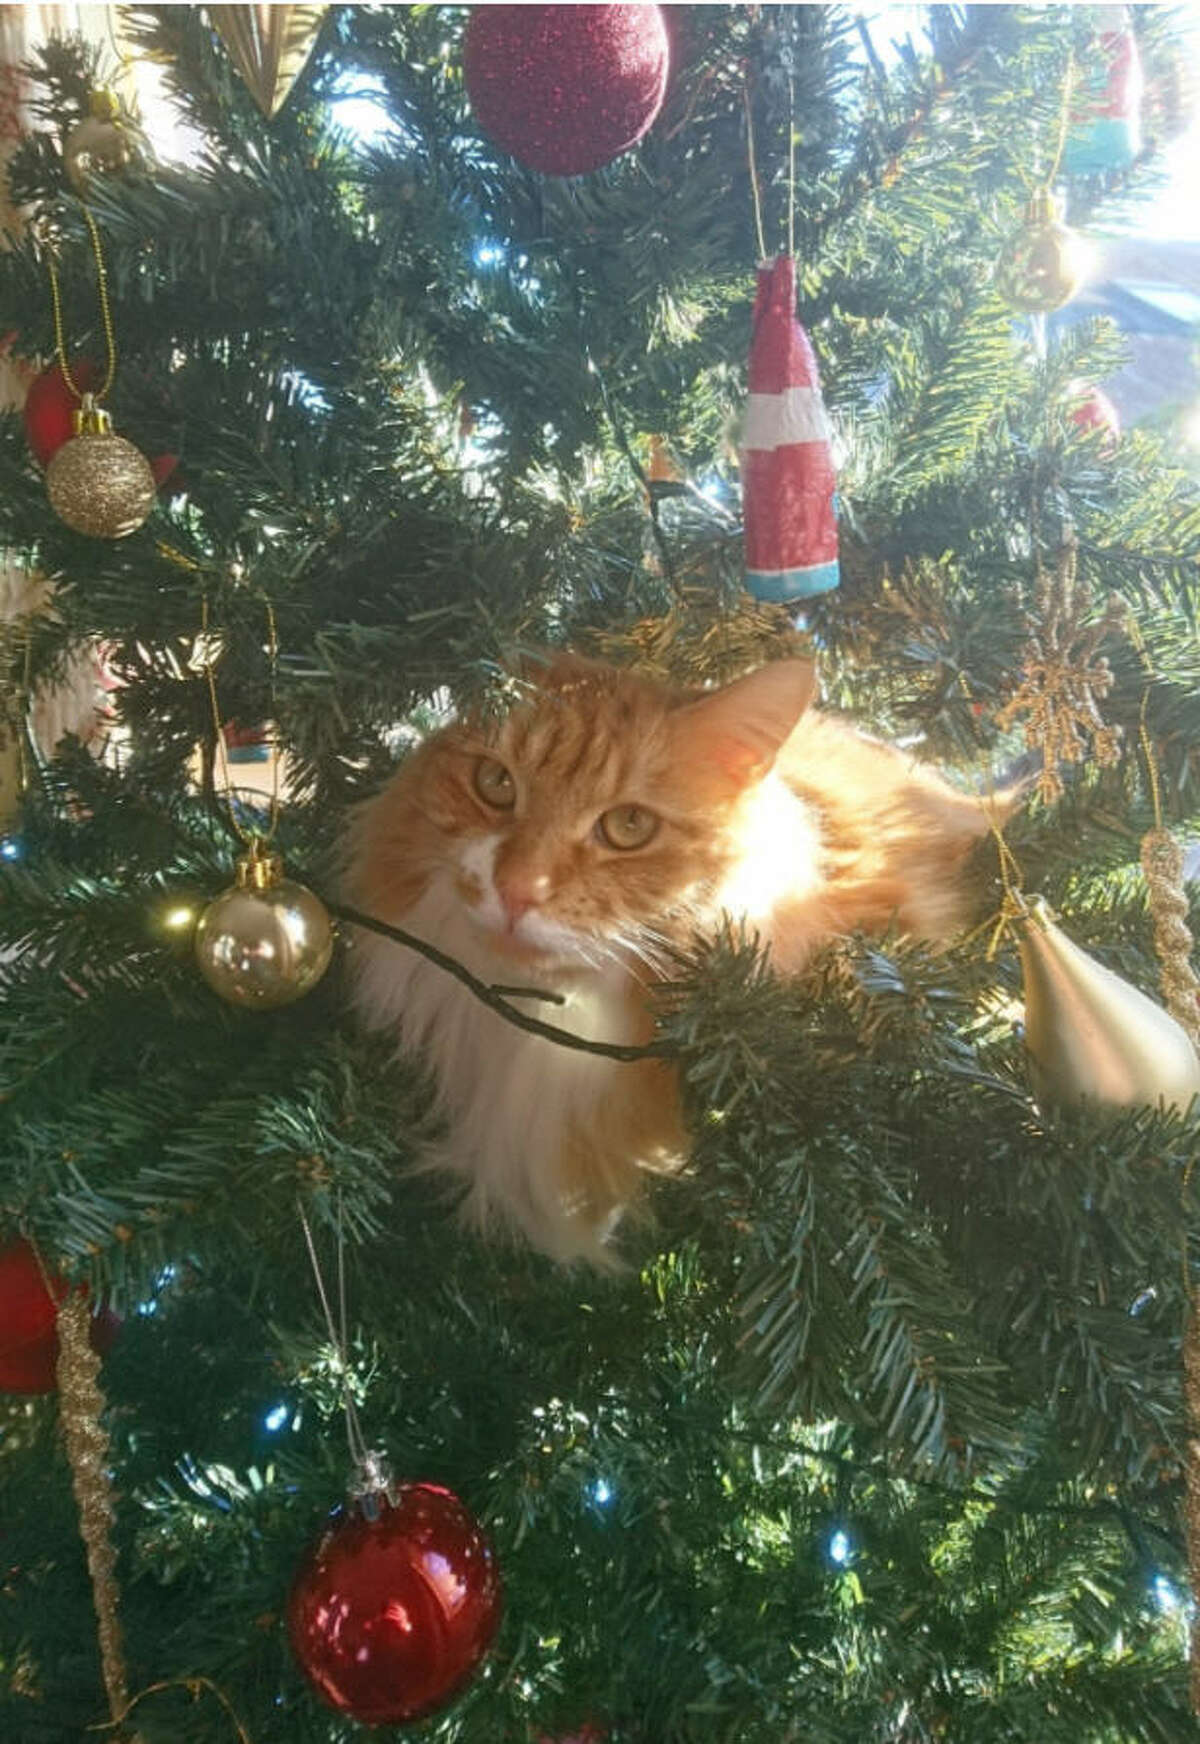 'Tis the season for cats climbing inside Christmas trees.